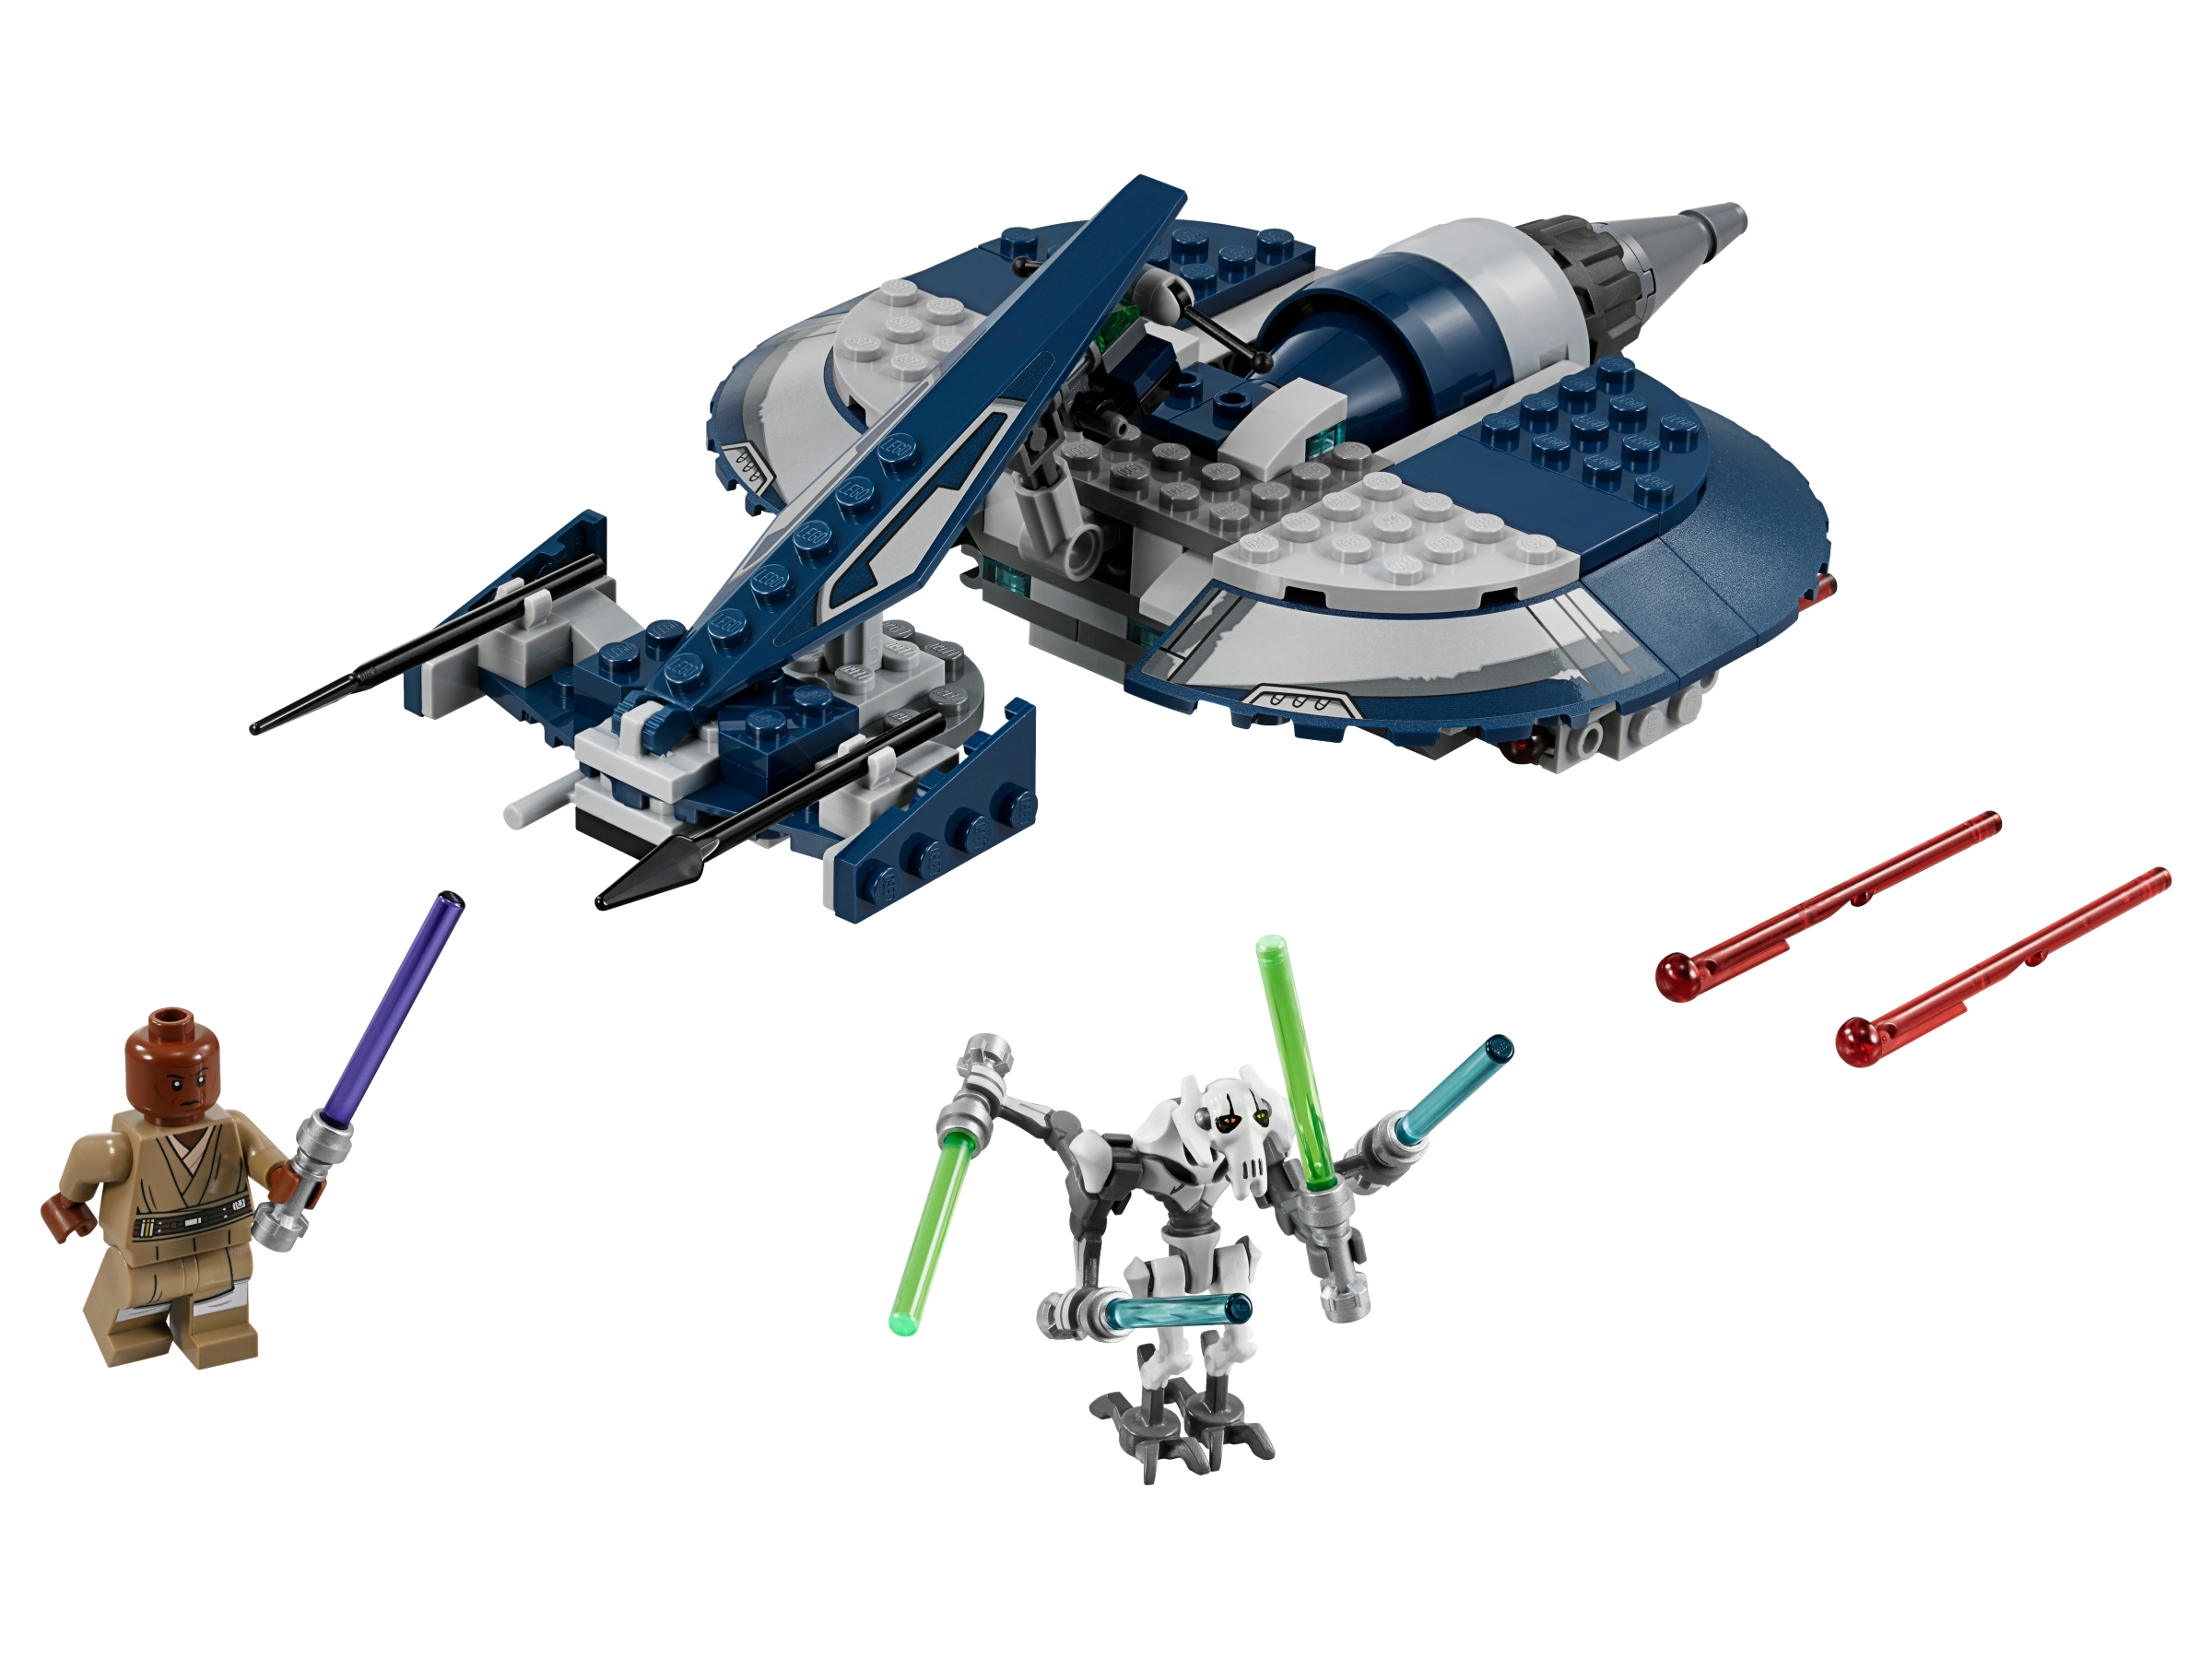 General Grievous' Combat Speeder 75199 | Star Wars™ | Buy online at the  Official LEGO® Shop US